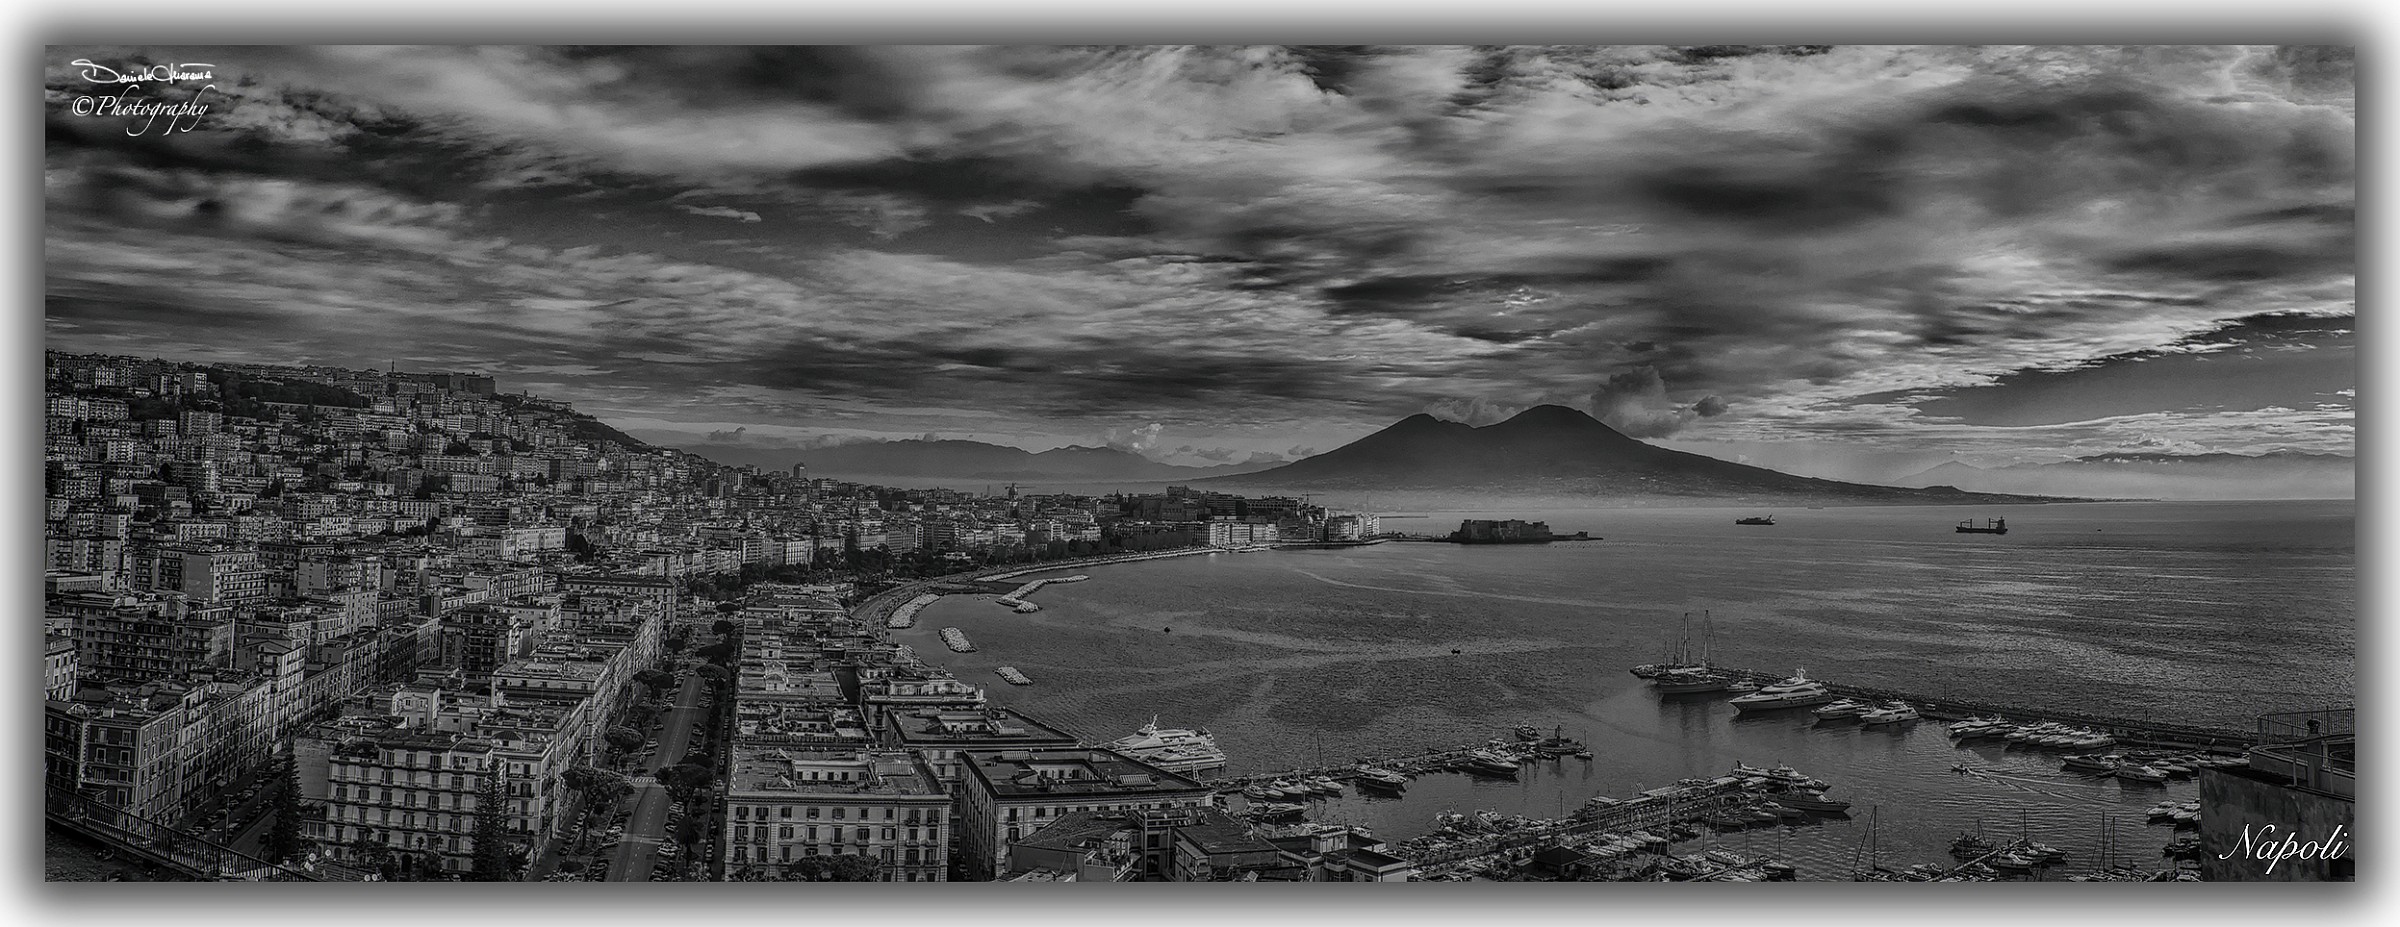 Naples a dream long eternity!...